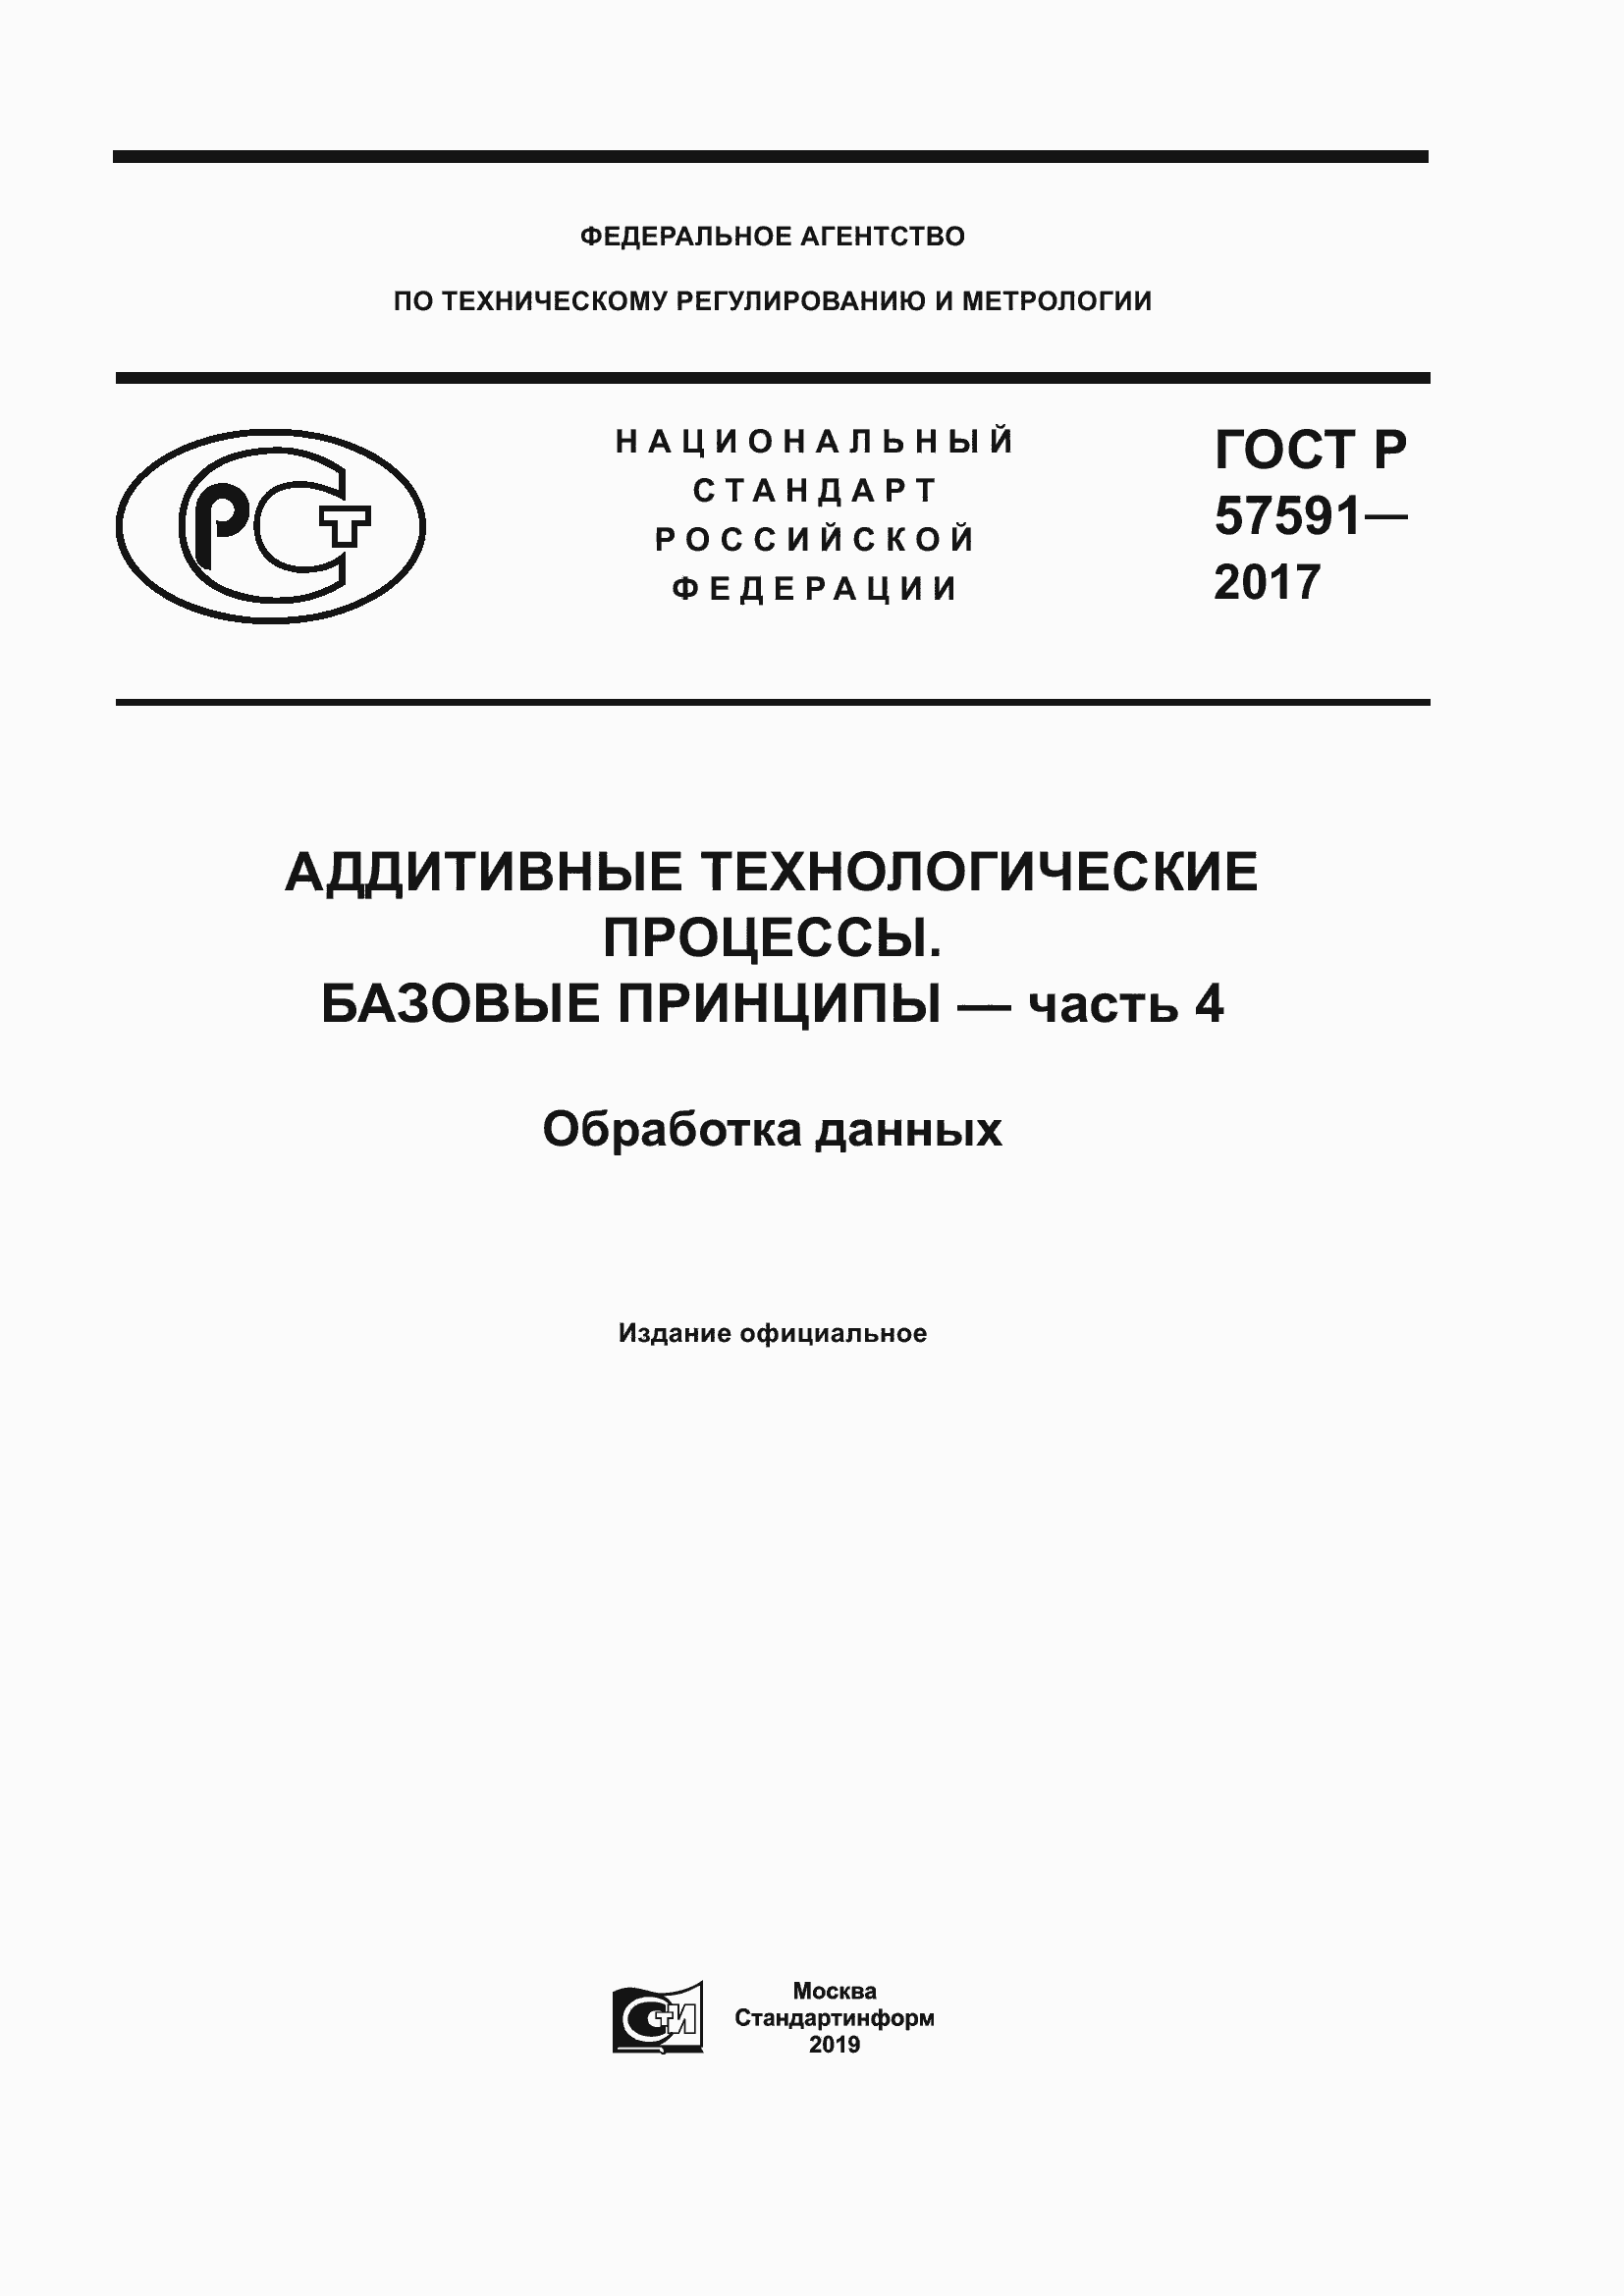 ГОСТ Р 57591-2017. Страница 1